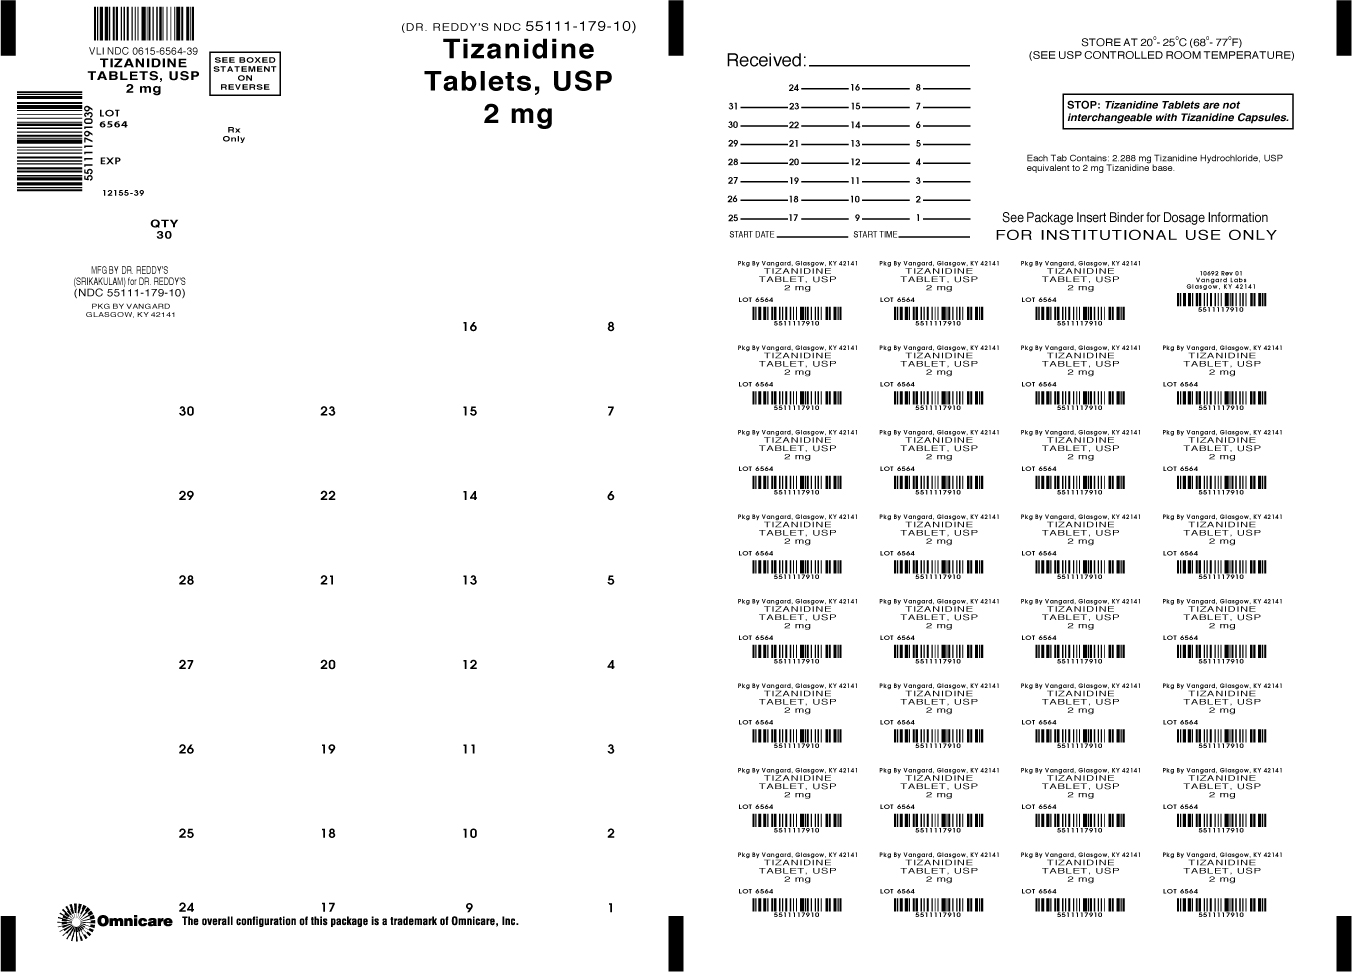 Tizanidine Tablets, USP 2mg bingo card label